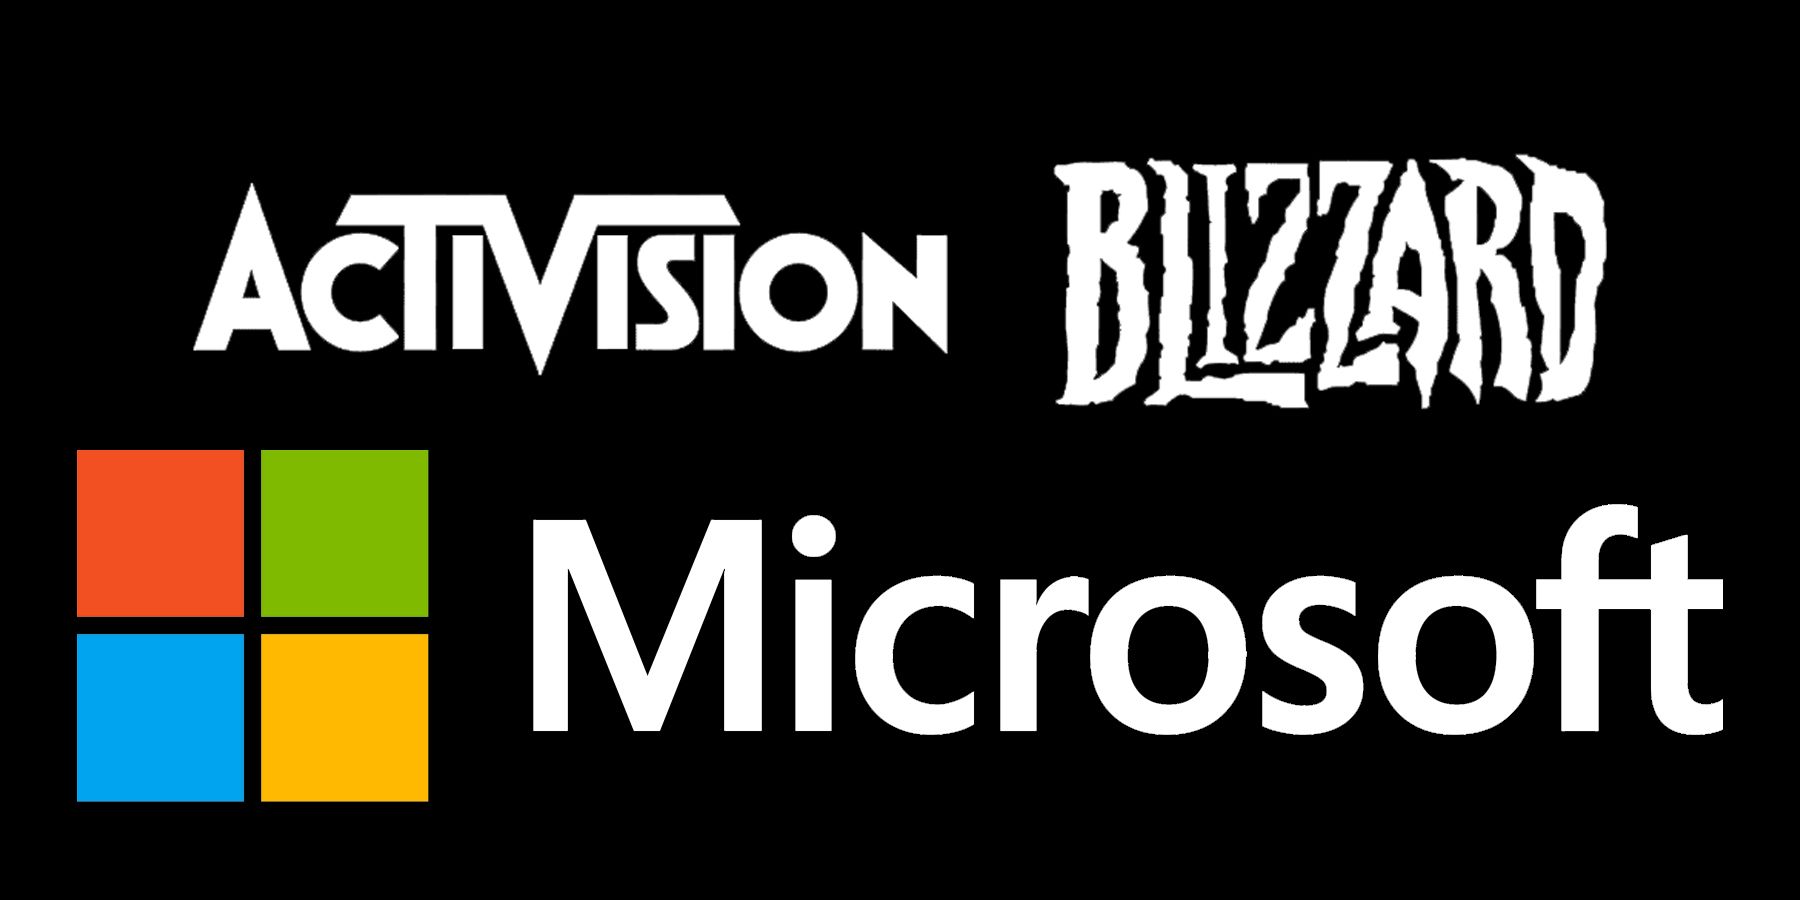 Activision Blizzard and Microsoft logos 